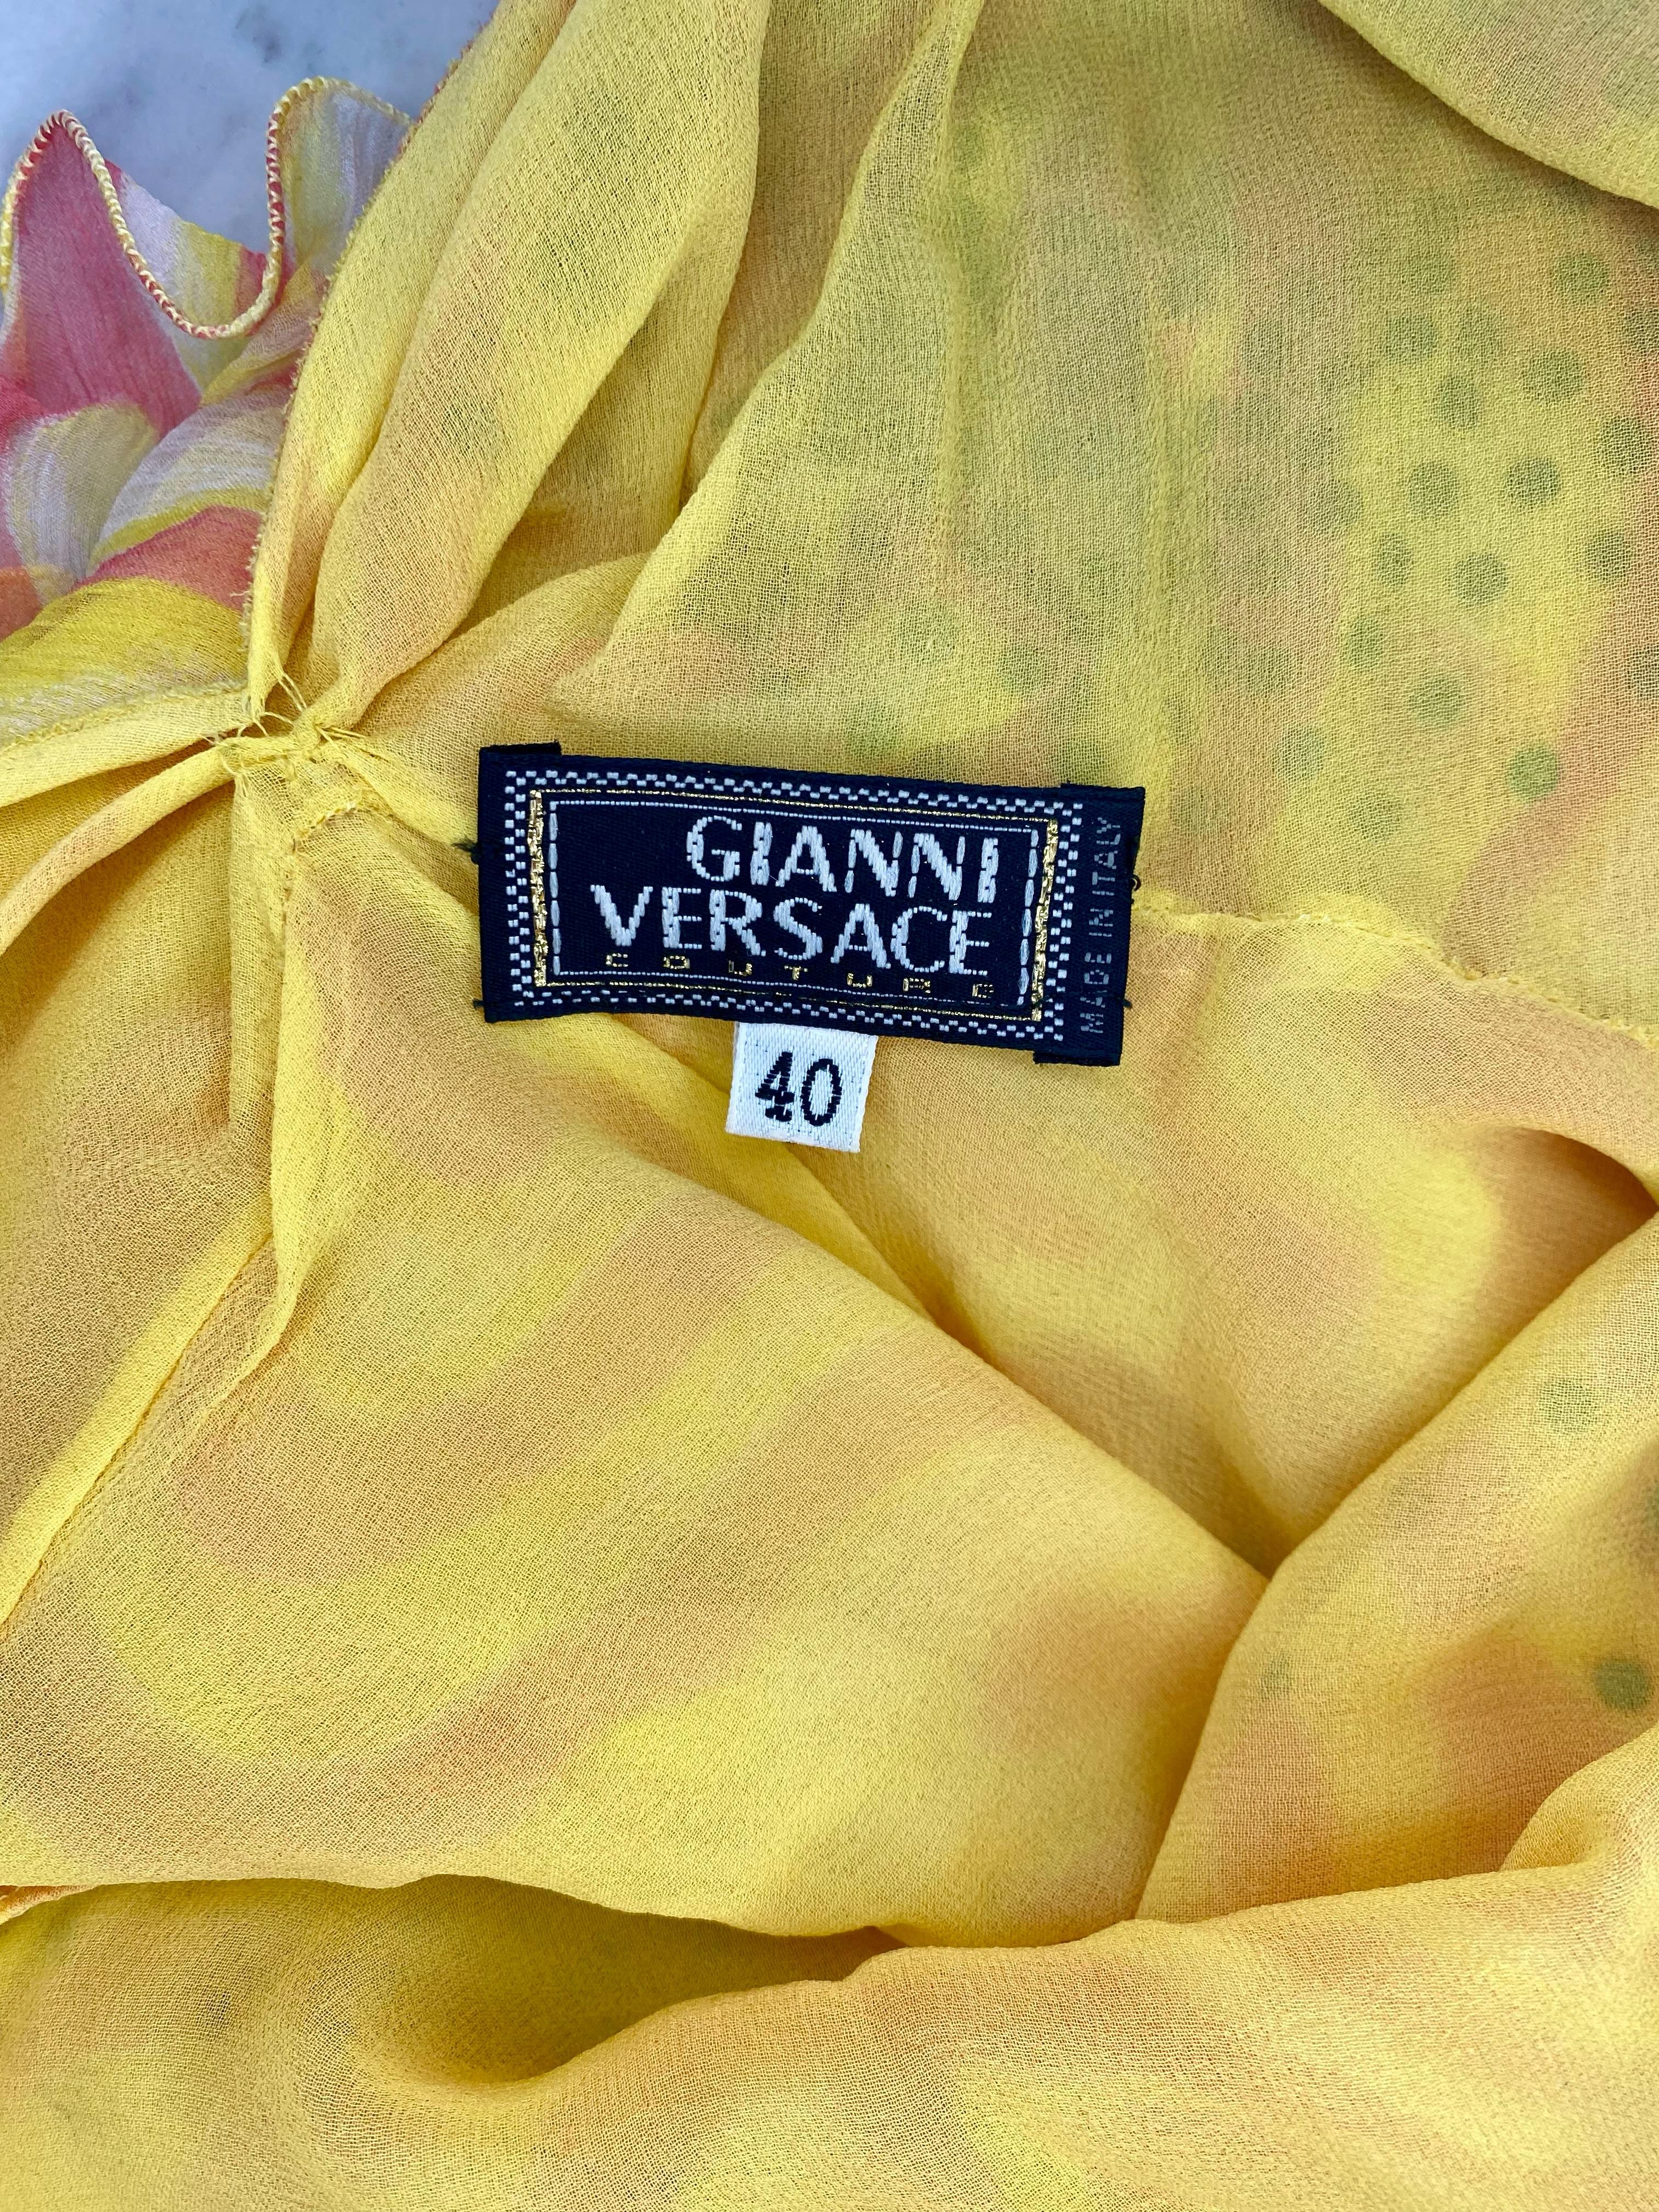 S/S 2000 Gianni Versace by Donatella Rhinestoned Sheer Chiffon ASO Beyoncé 1